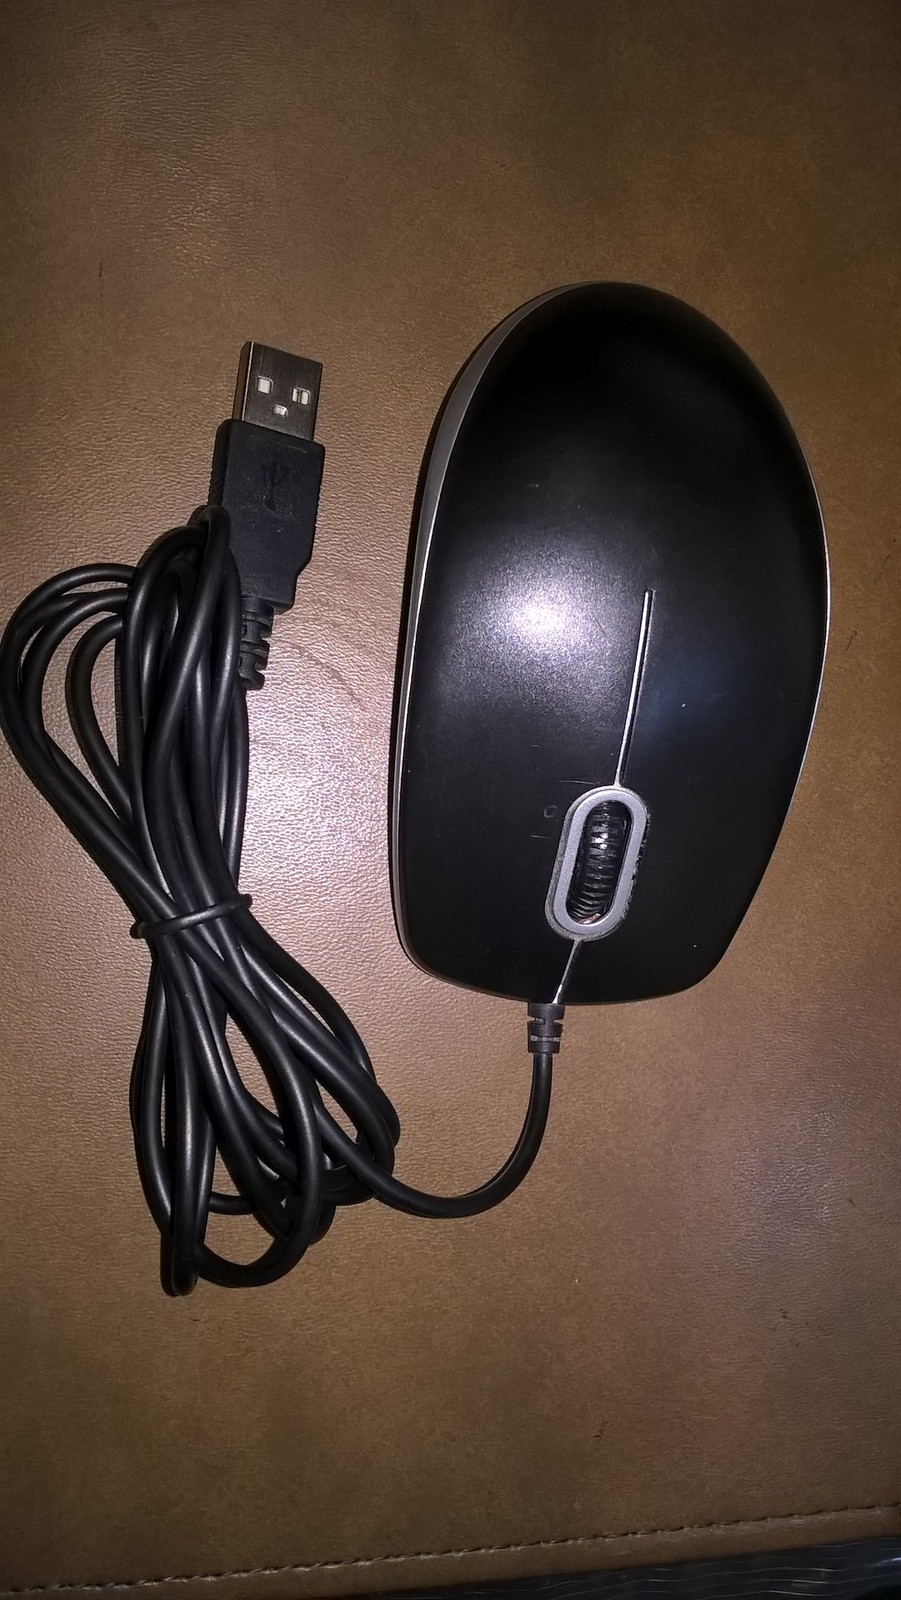 iMicro MO-9211U USB Wired Optical Mouse (Black/Silver) - $1.99